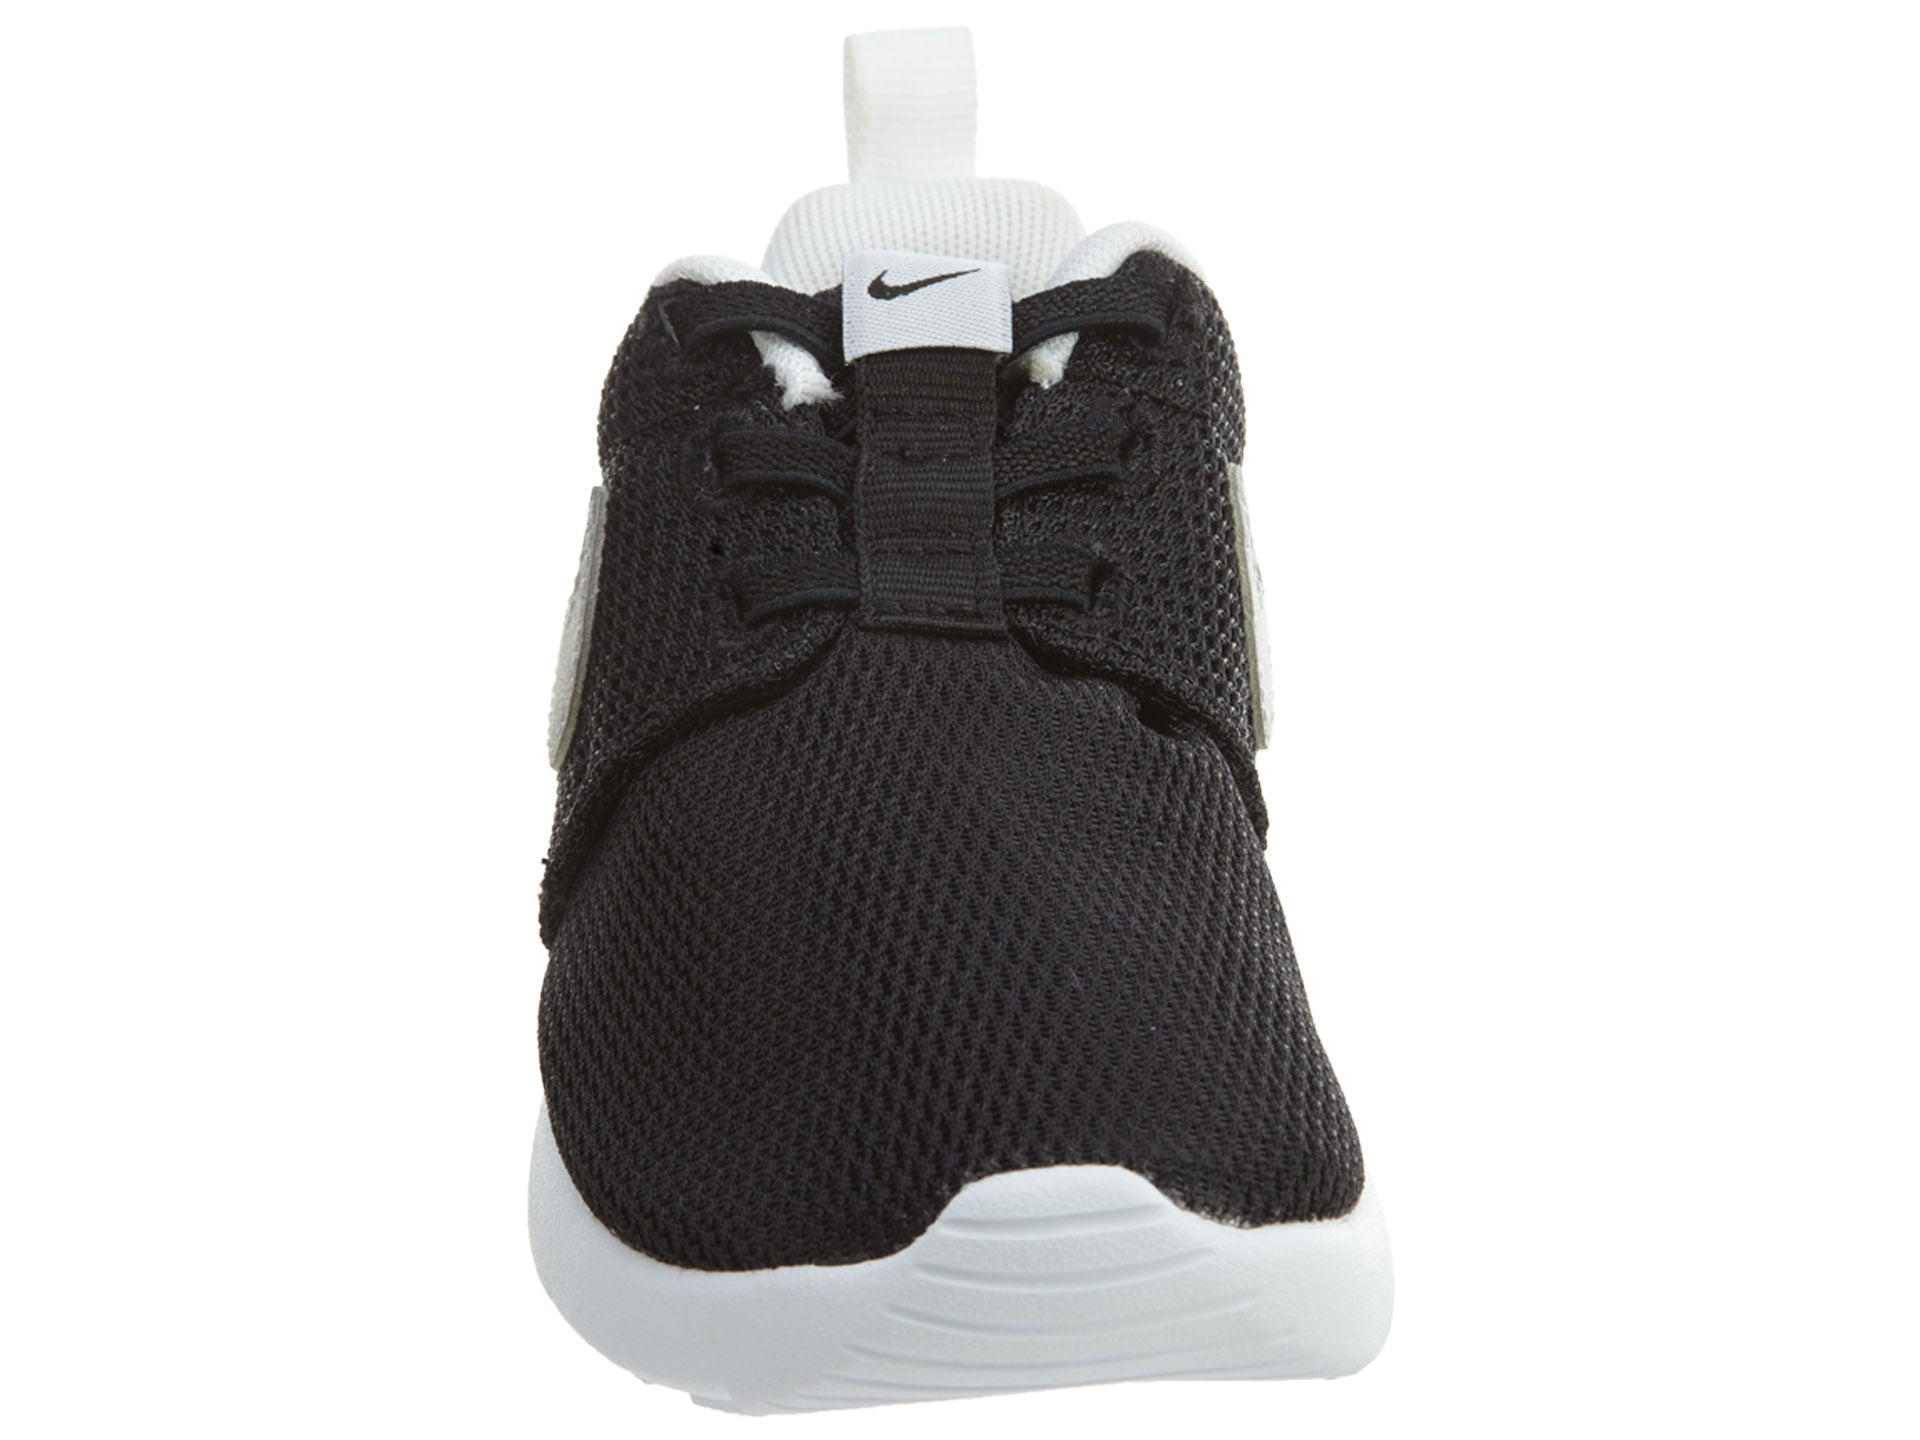 Nike Roshe One NIB TDV Black White Shoes Boys / Girls Style :749430